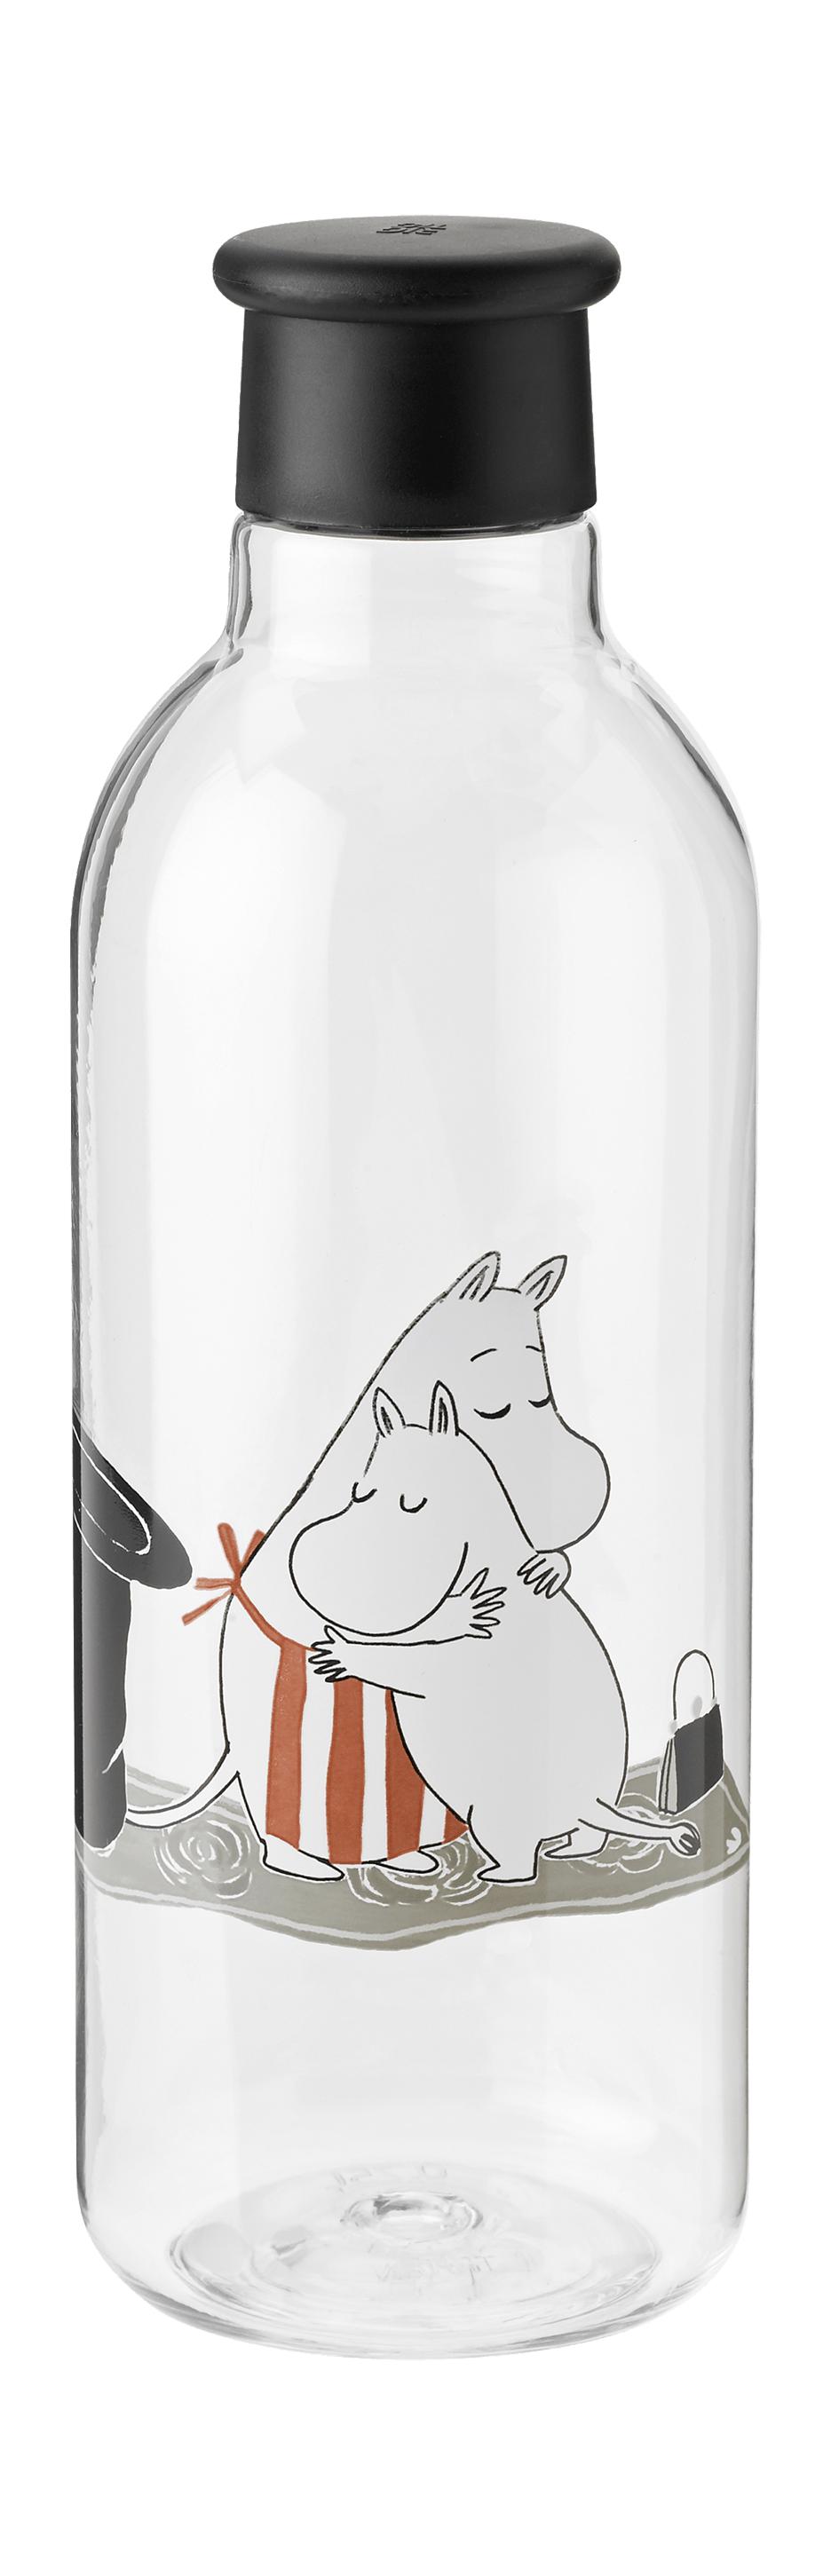 Rig-Tig Rig-Tig X Moomin Drinking Bottle i 0,75 L, Moomin Black